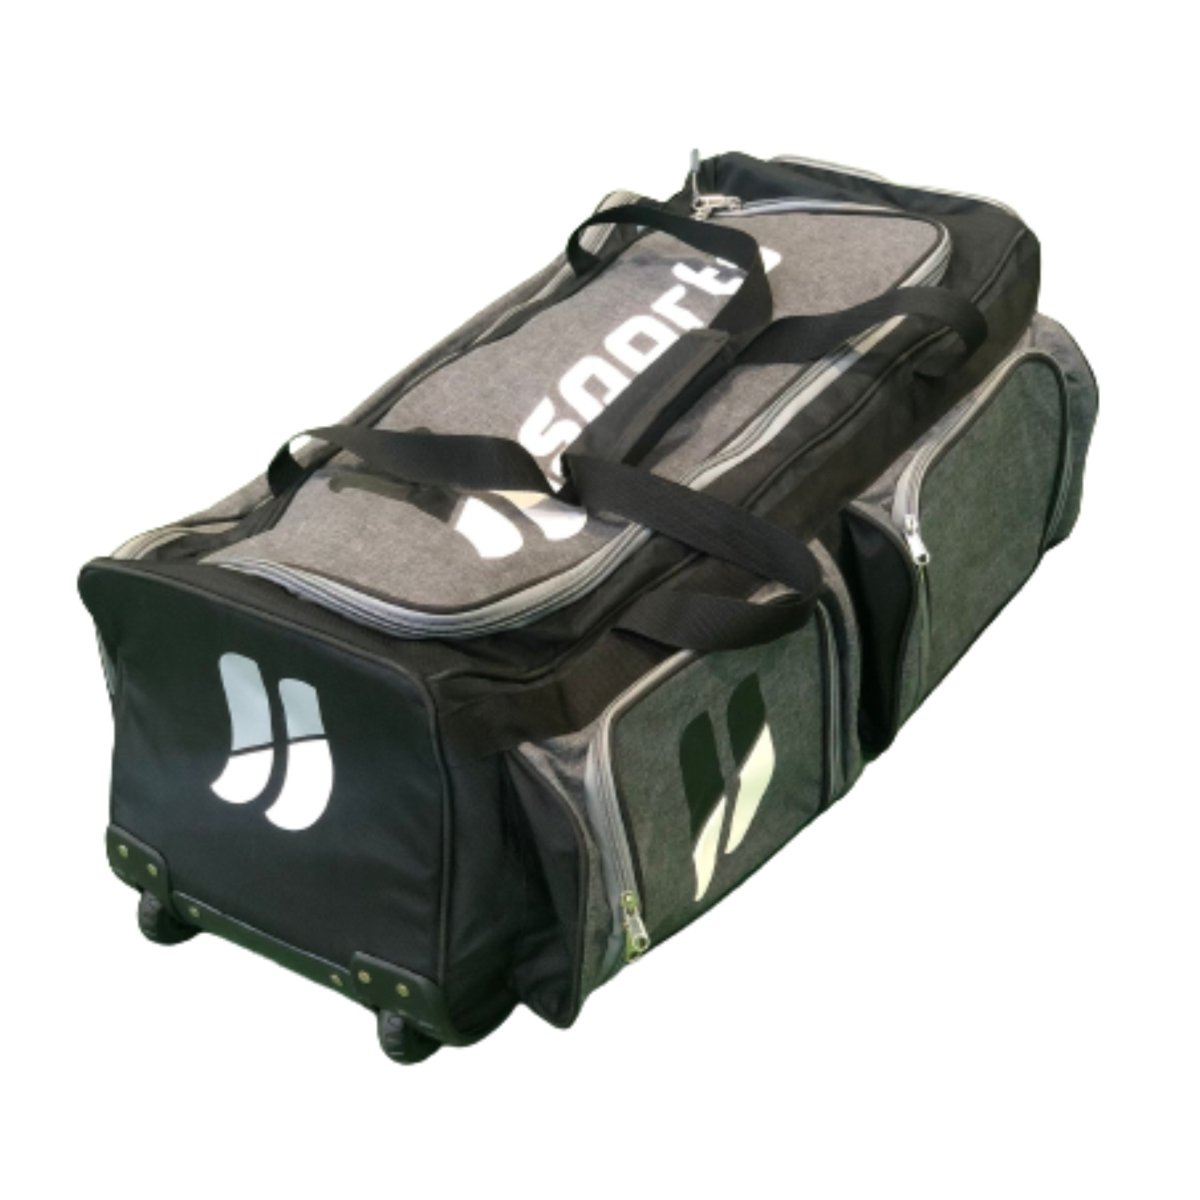 JJ Sports Celestial Pro 3.0 Cricket Kit Bag Wheelie